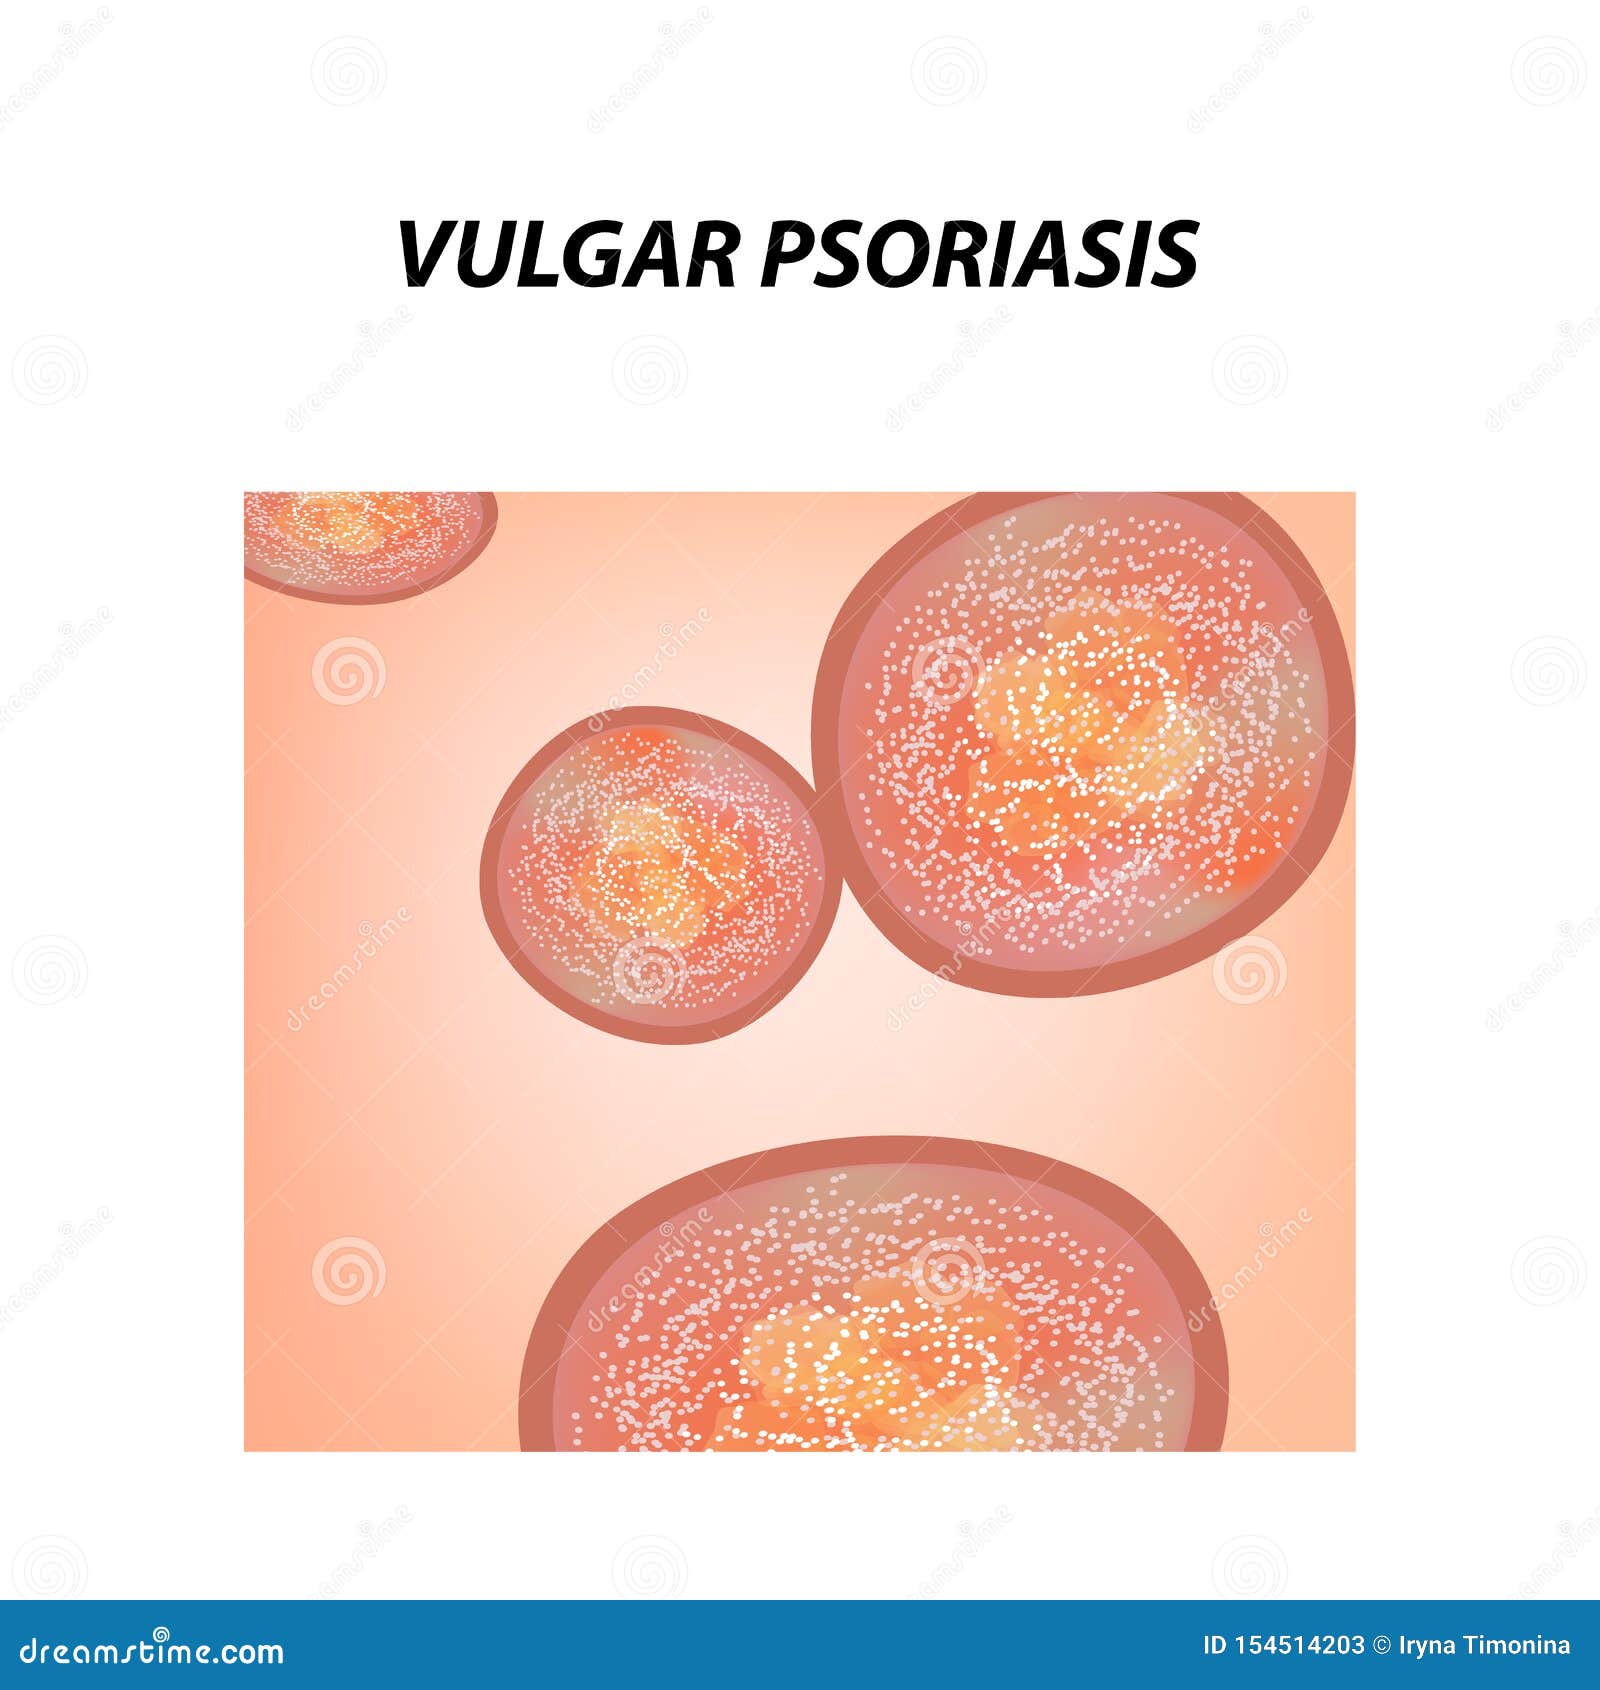 psoriasis vulgar photos a hidegtől a bőrt vörös foltok borítják